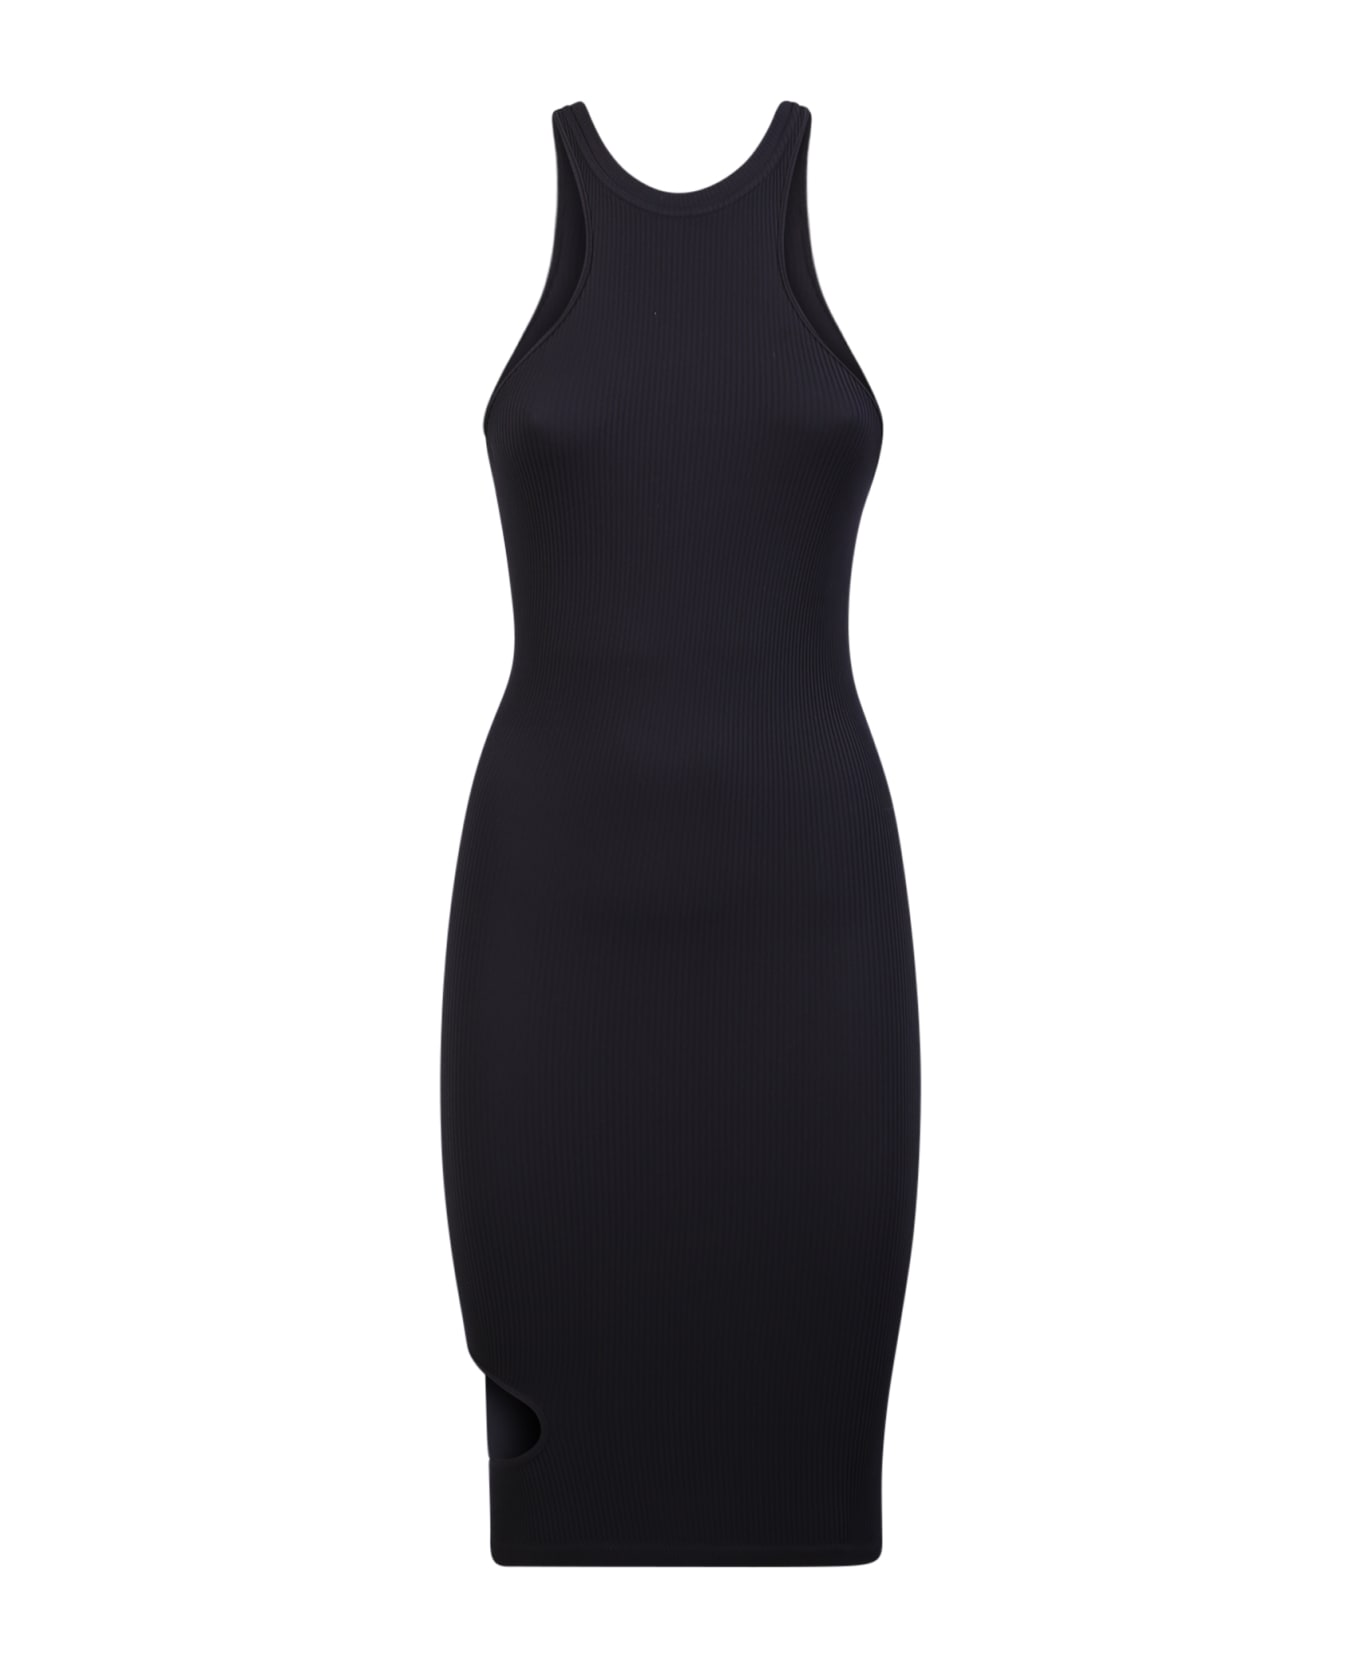 ANDREĀDAMO Black Close-fitting Stretch Dress - Black